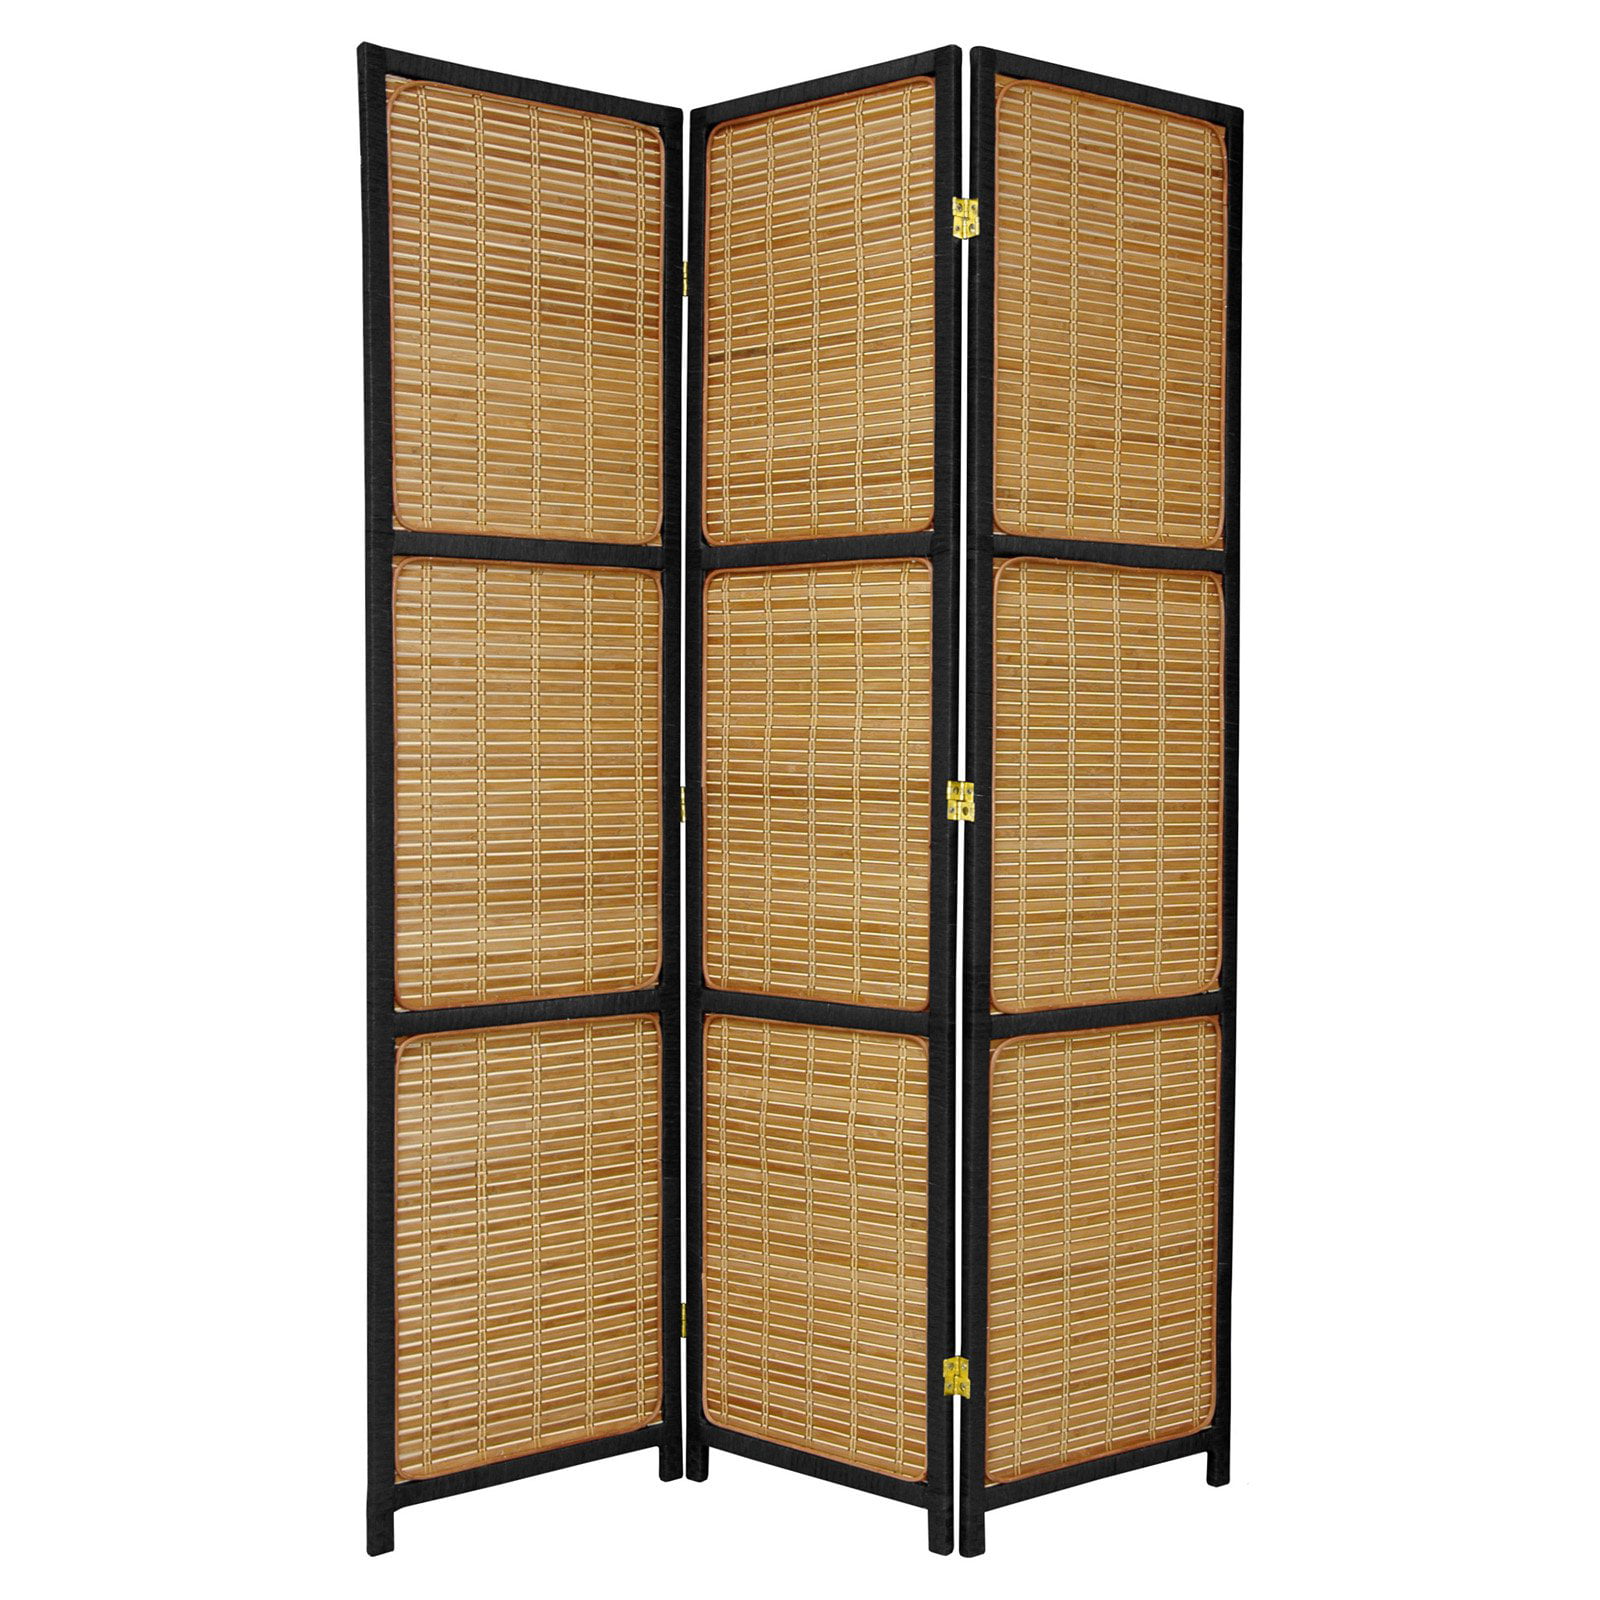 3 Panel Oriental Furniture 6 ft Black Tall Diamond Weave Fiber Room Divider